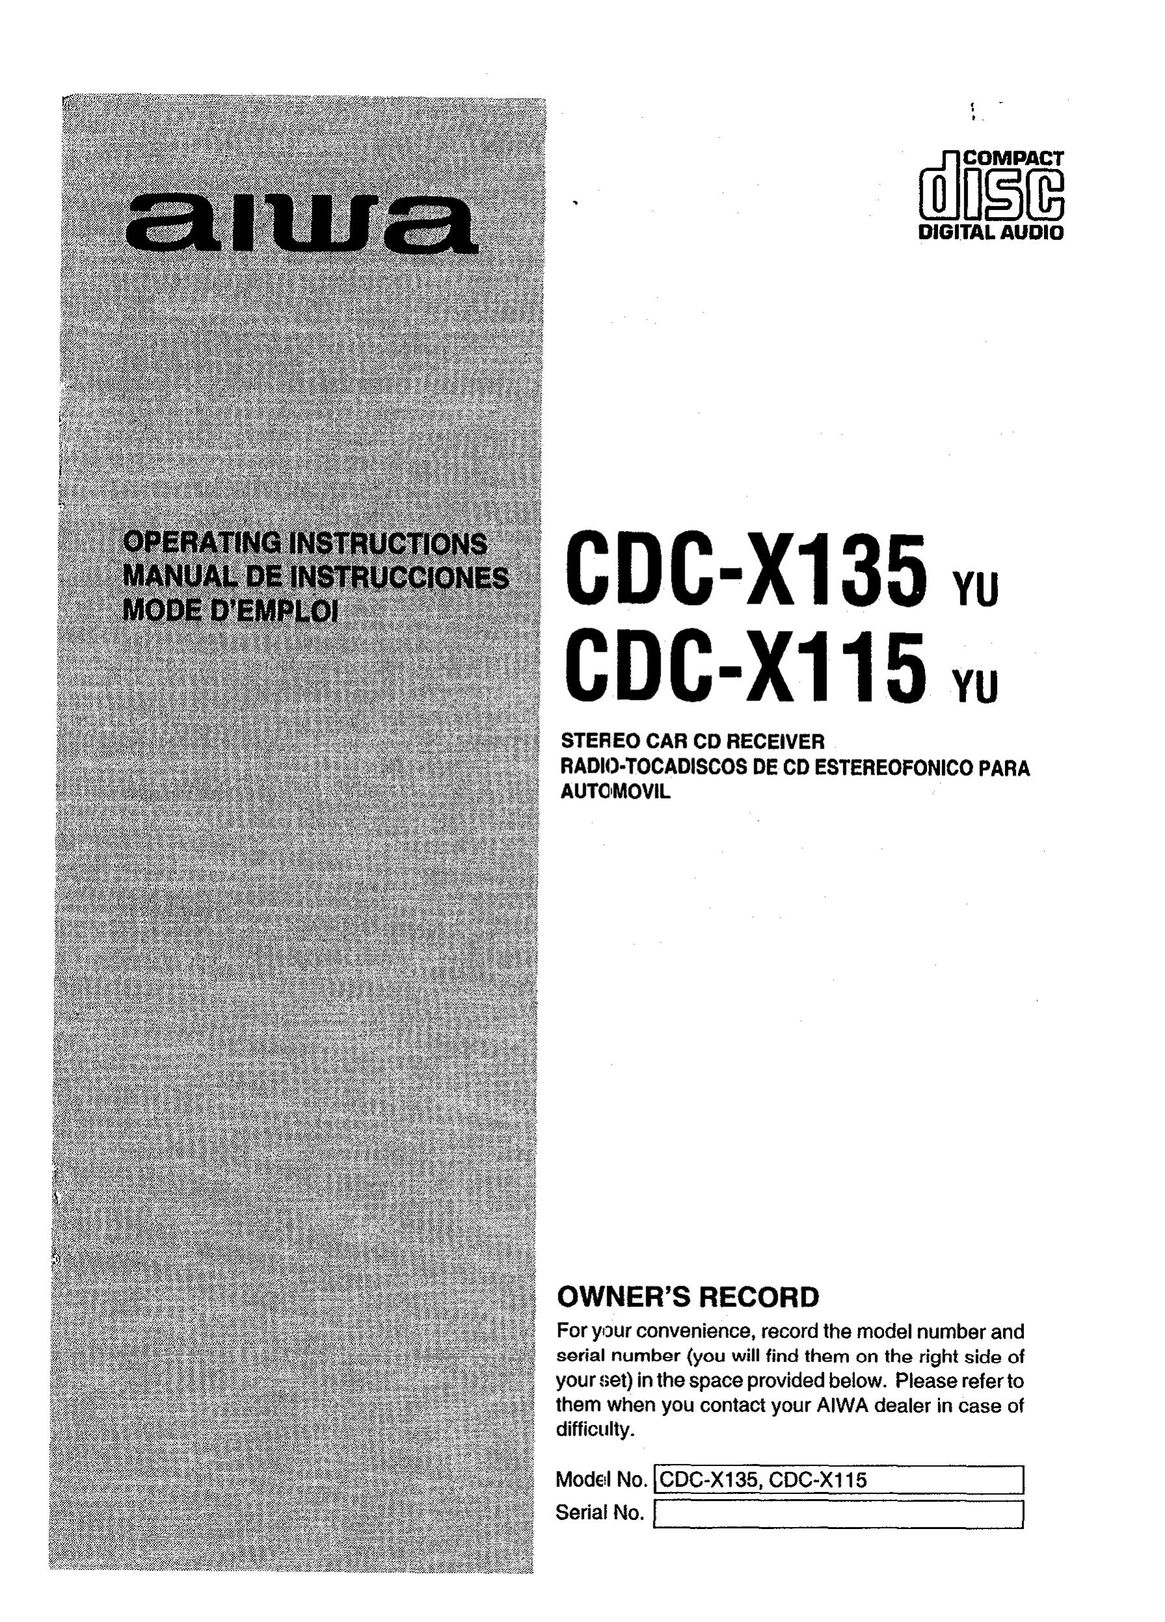 Aiwa CDC-X135 Car Stereo System User Manual